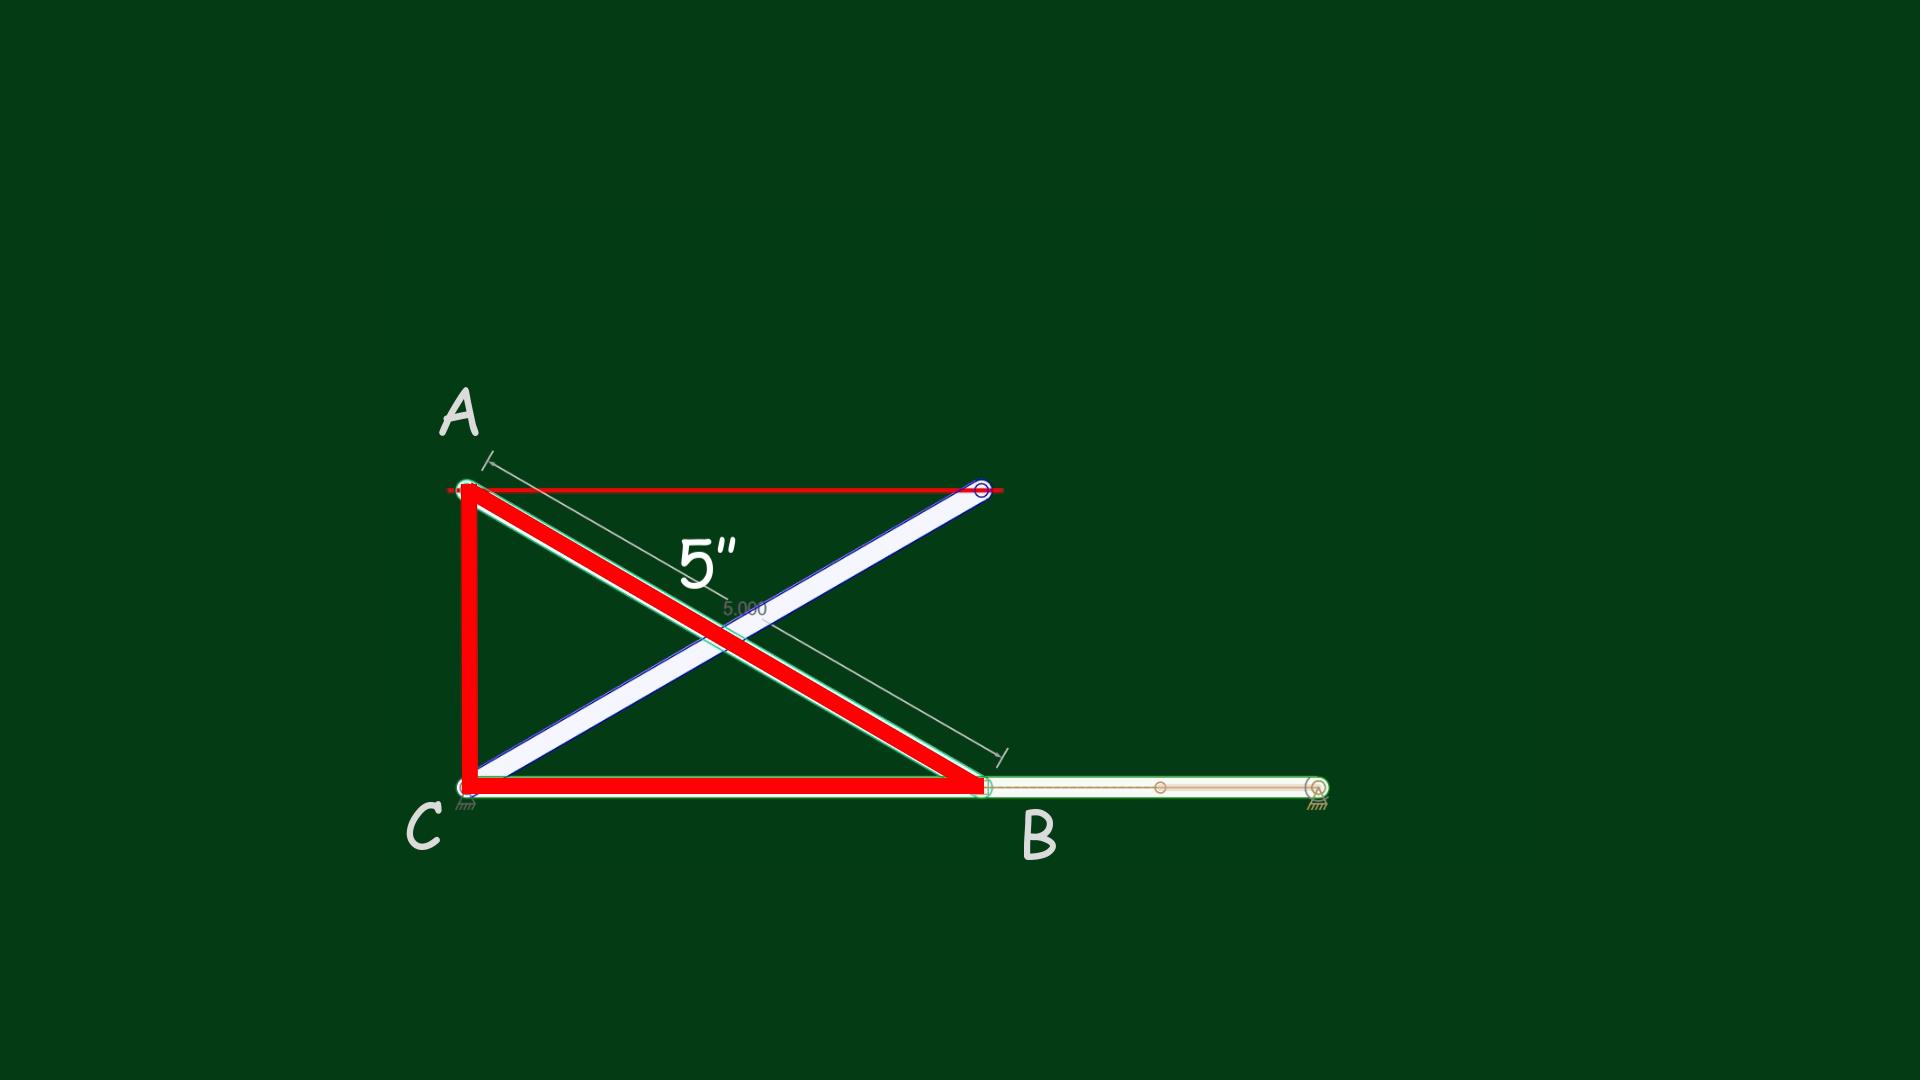 Right triangle ABC drawn on scissors linkage model.